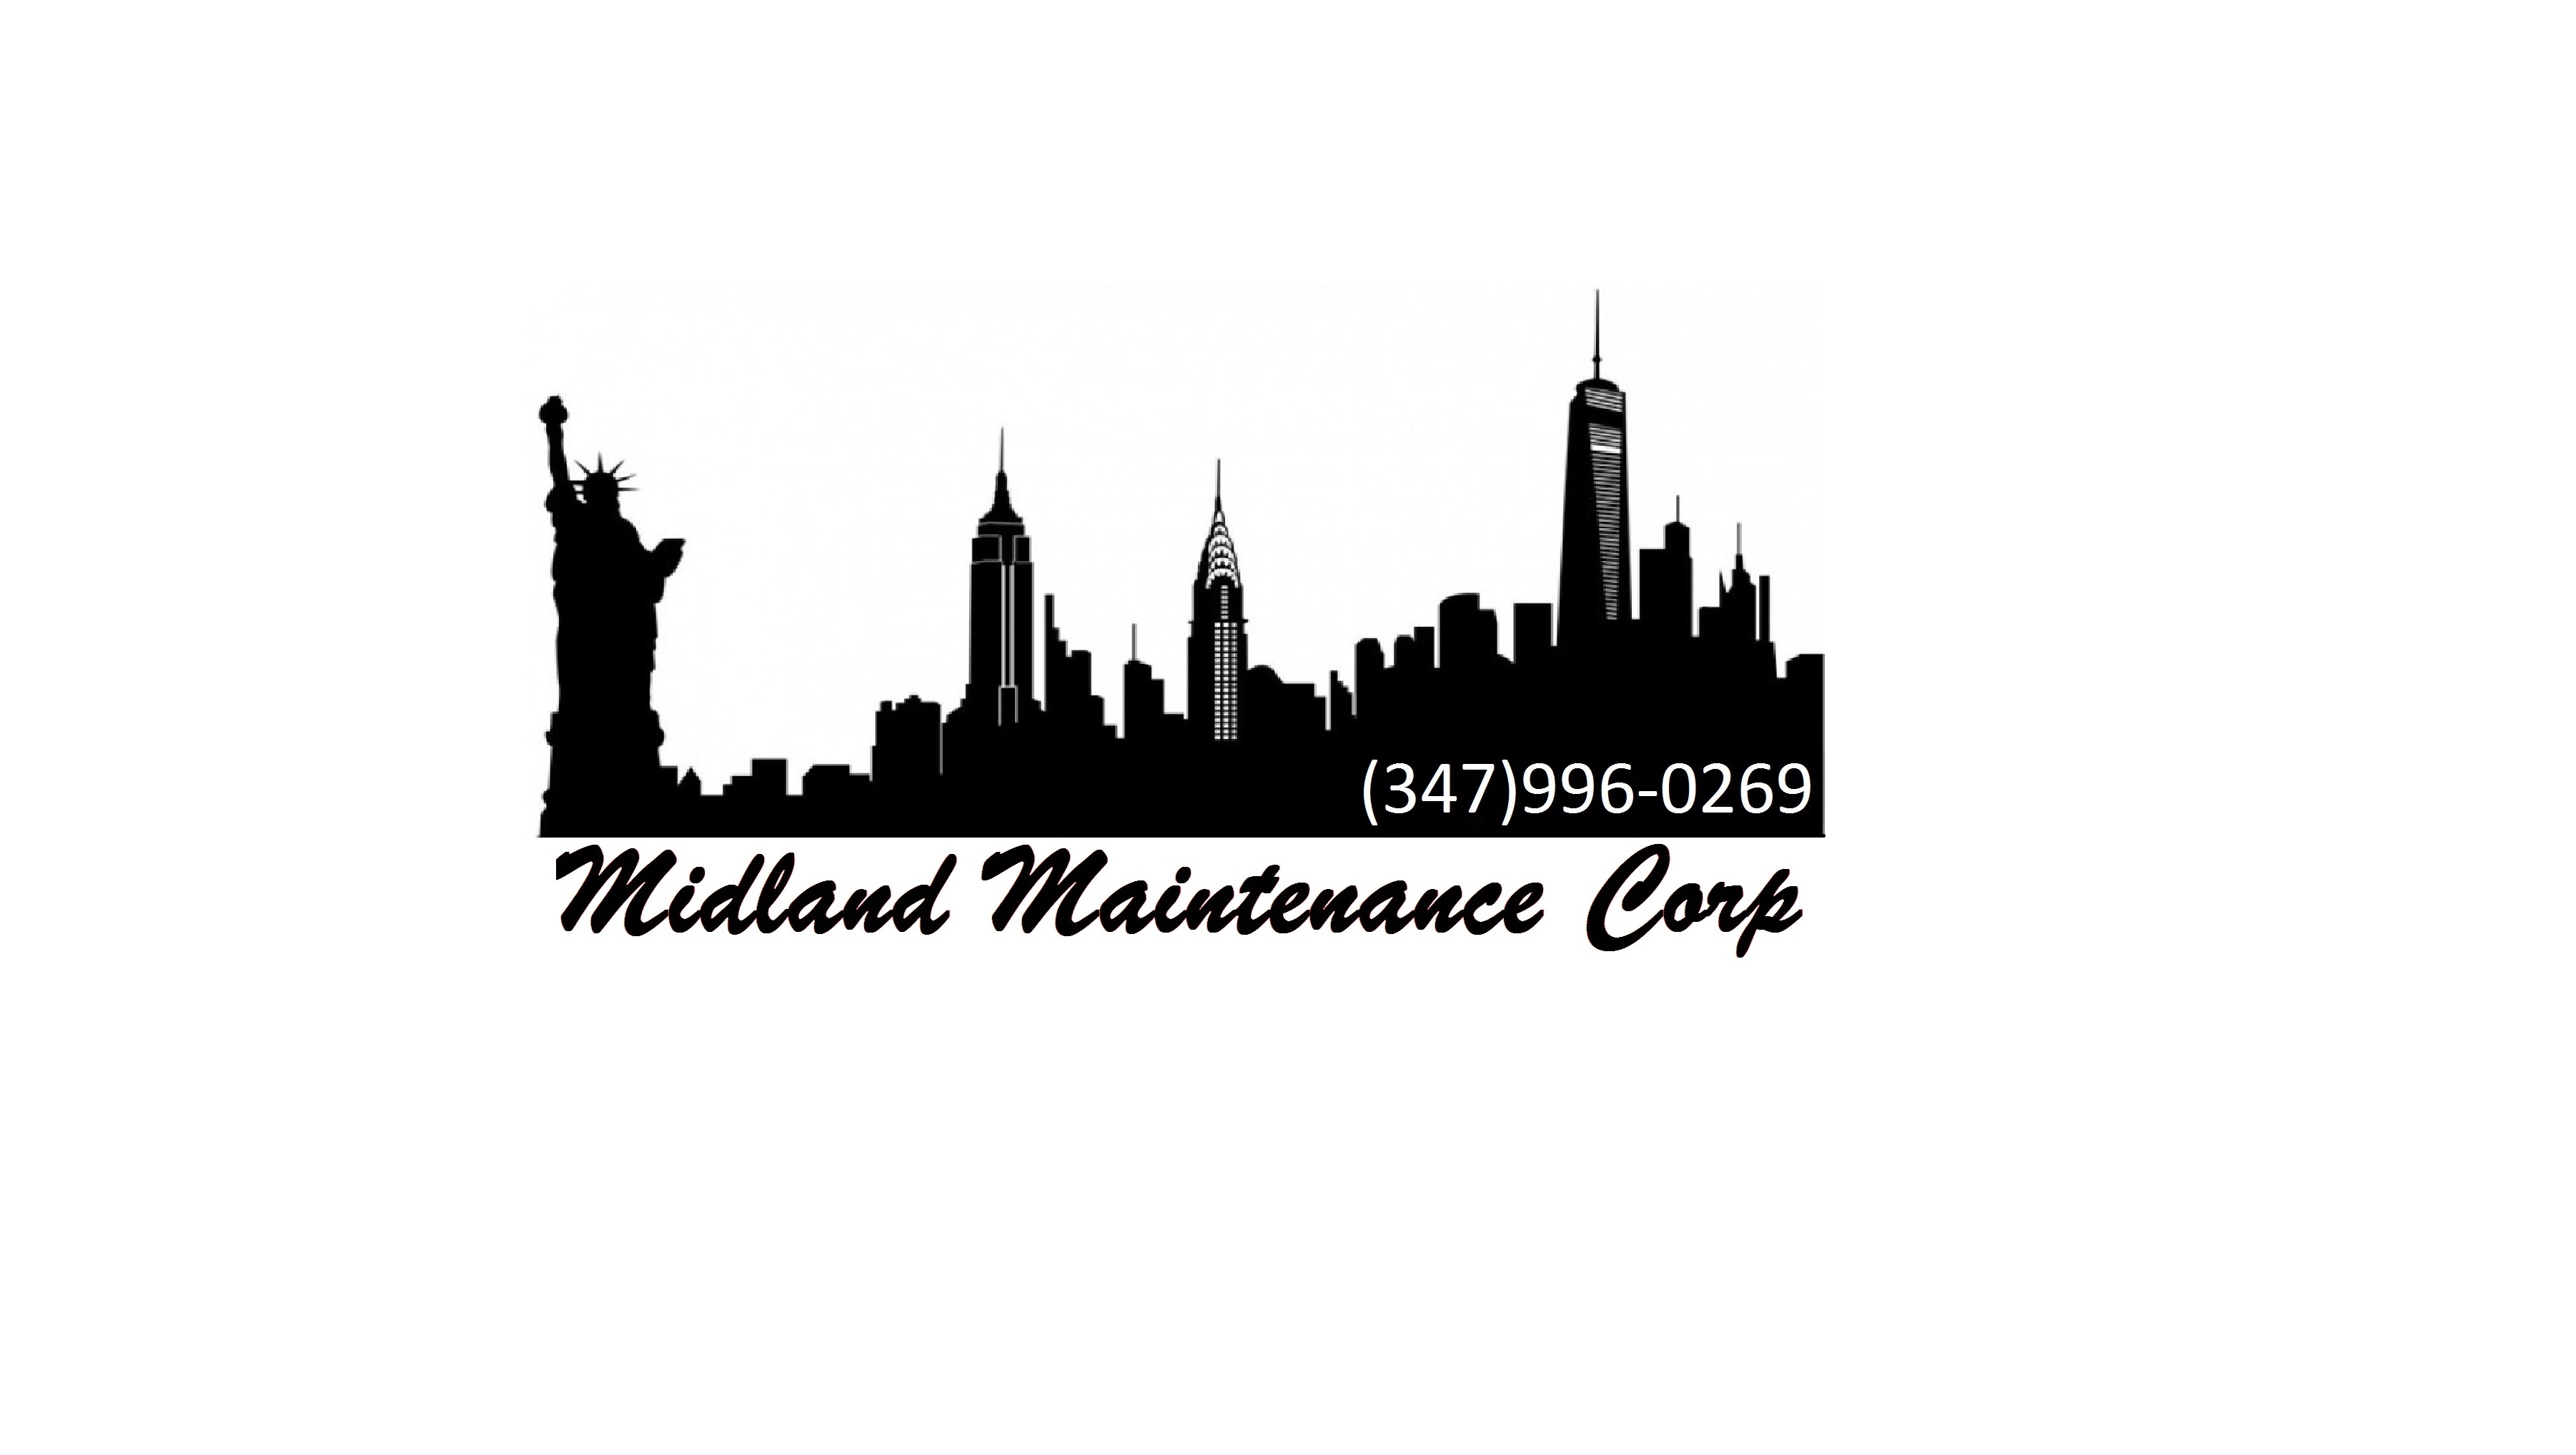 Midland Maintenance Corp. Logo